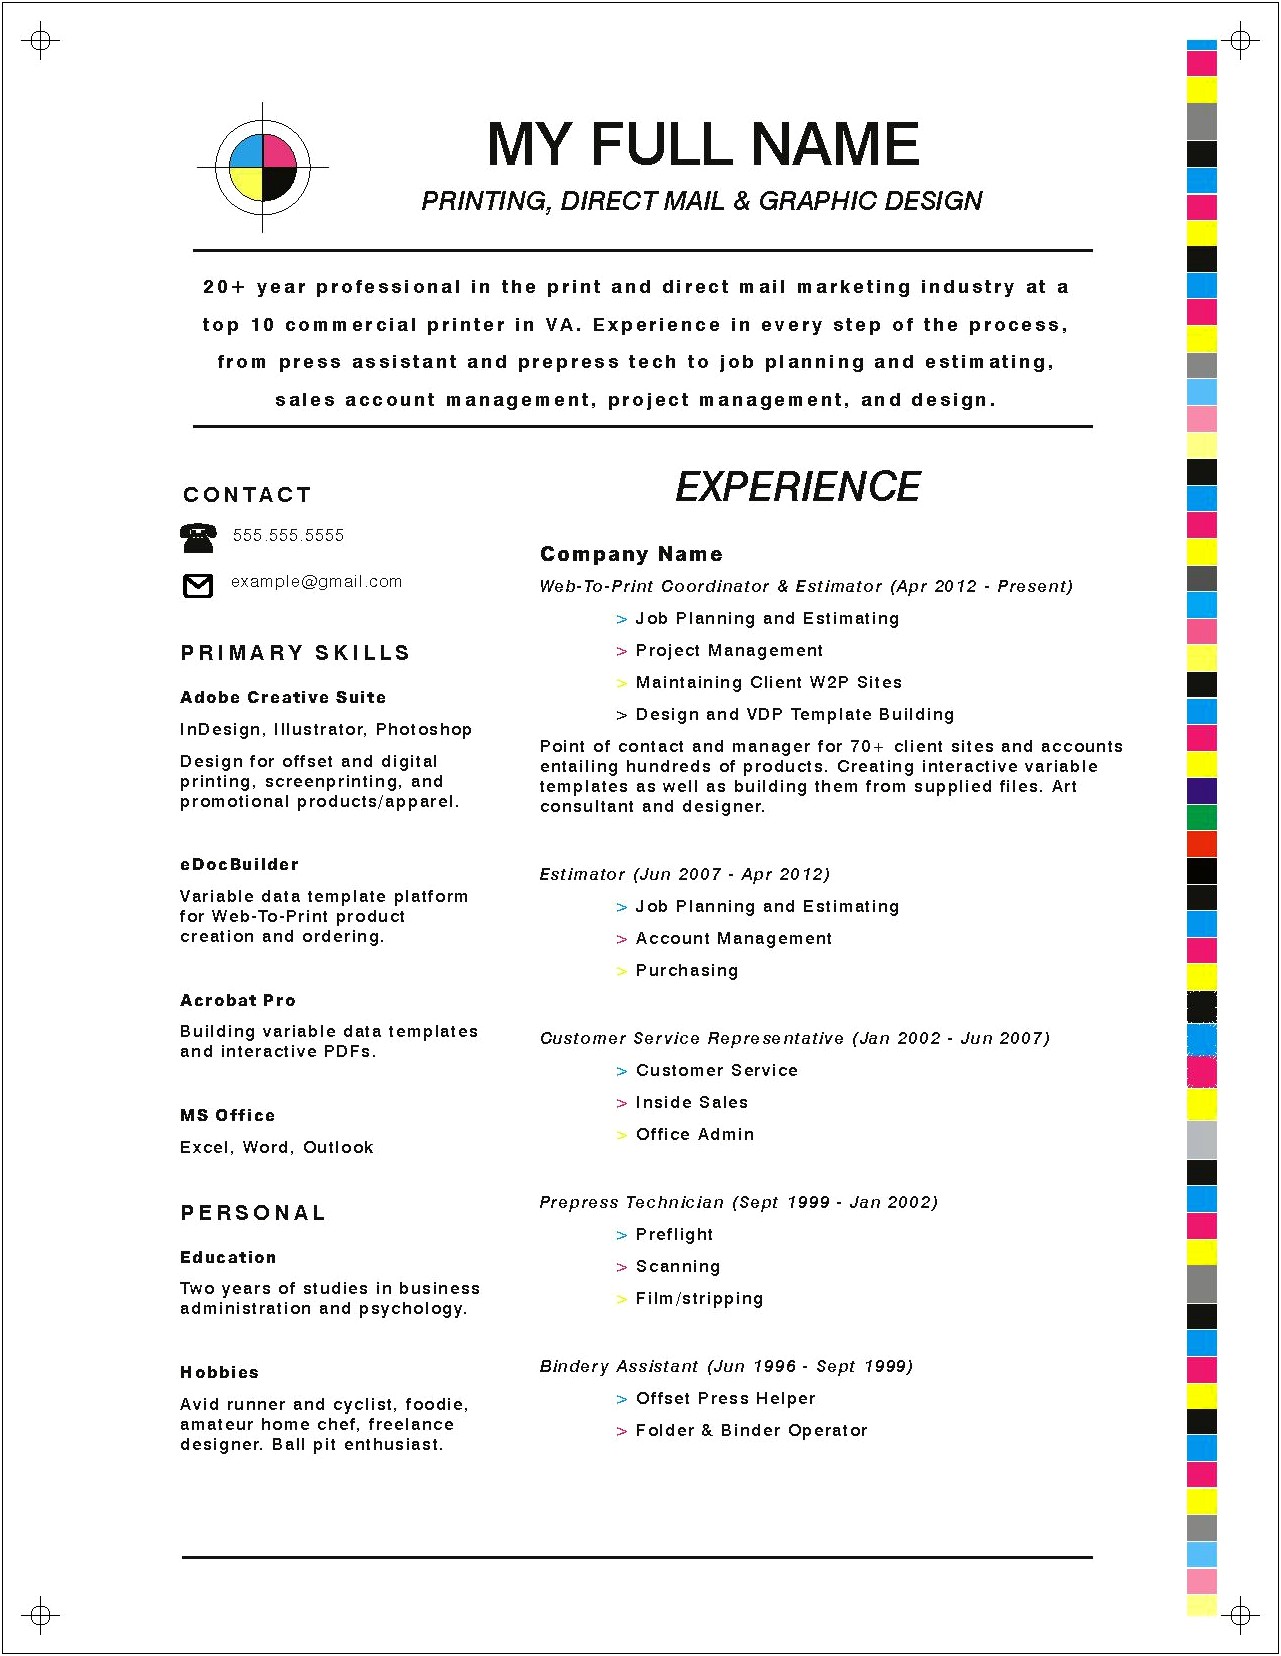 Graphic Design Director Job Description Resume